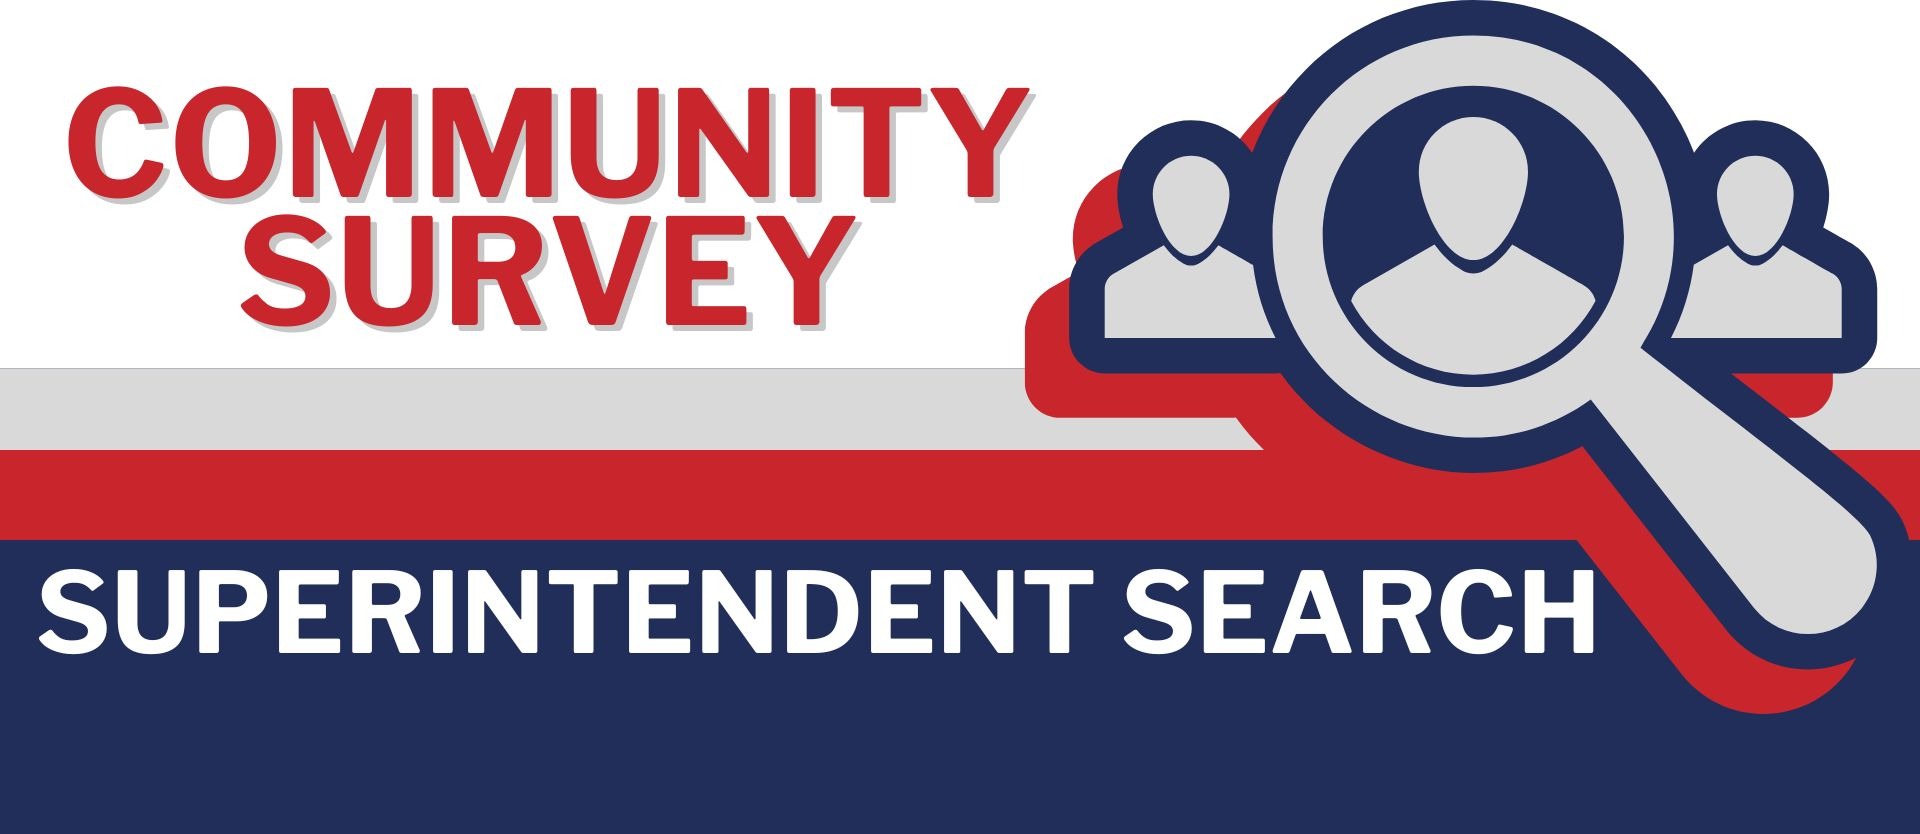 superintendent search survey